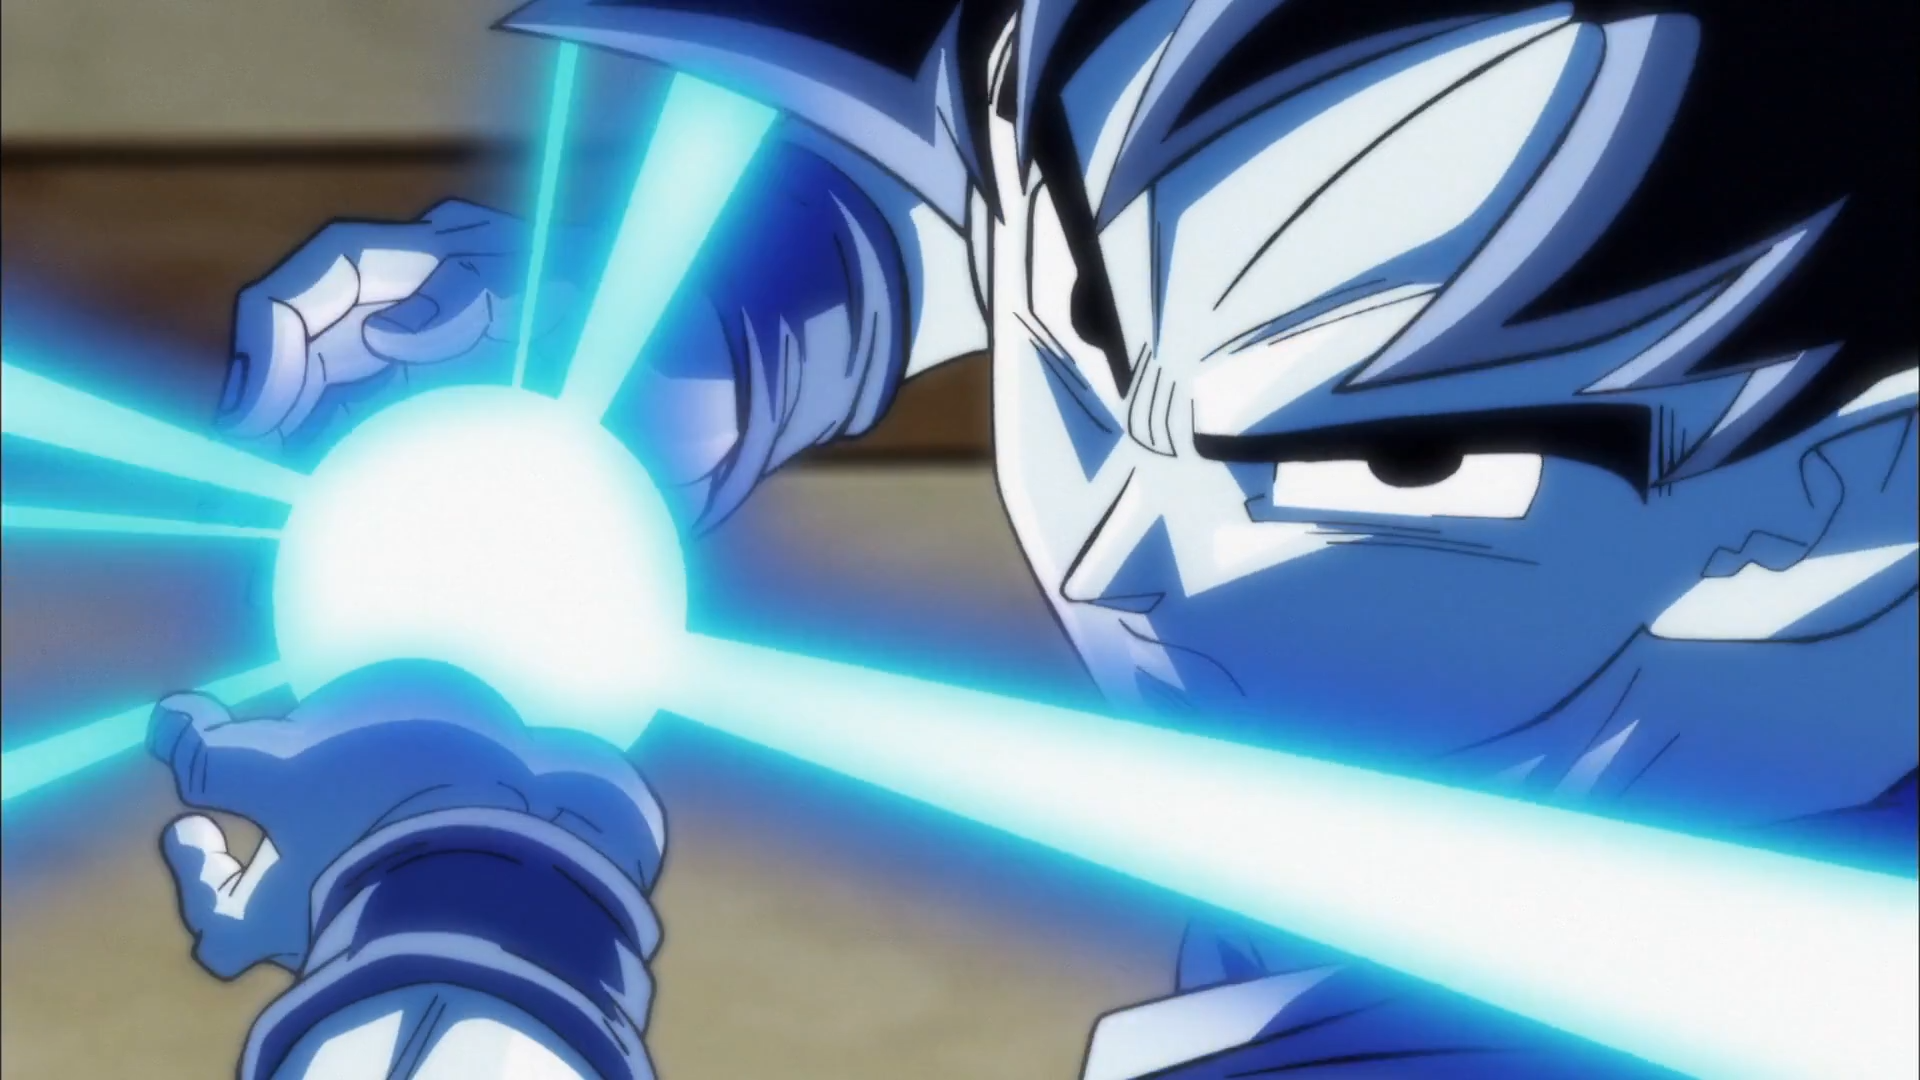 Bakarott on X: BLUE GOKU #Dragonball #Goku #kamehameha